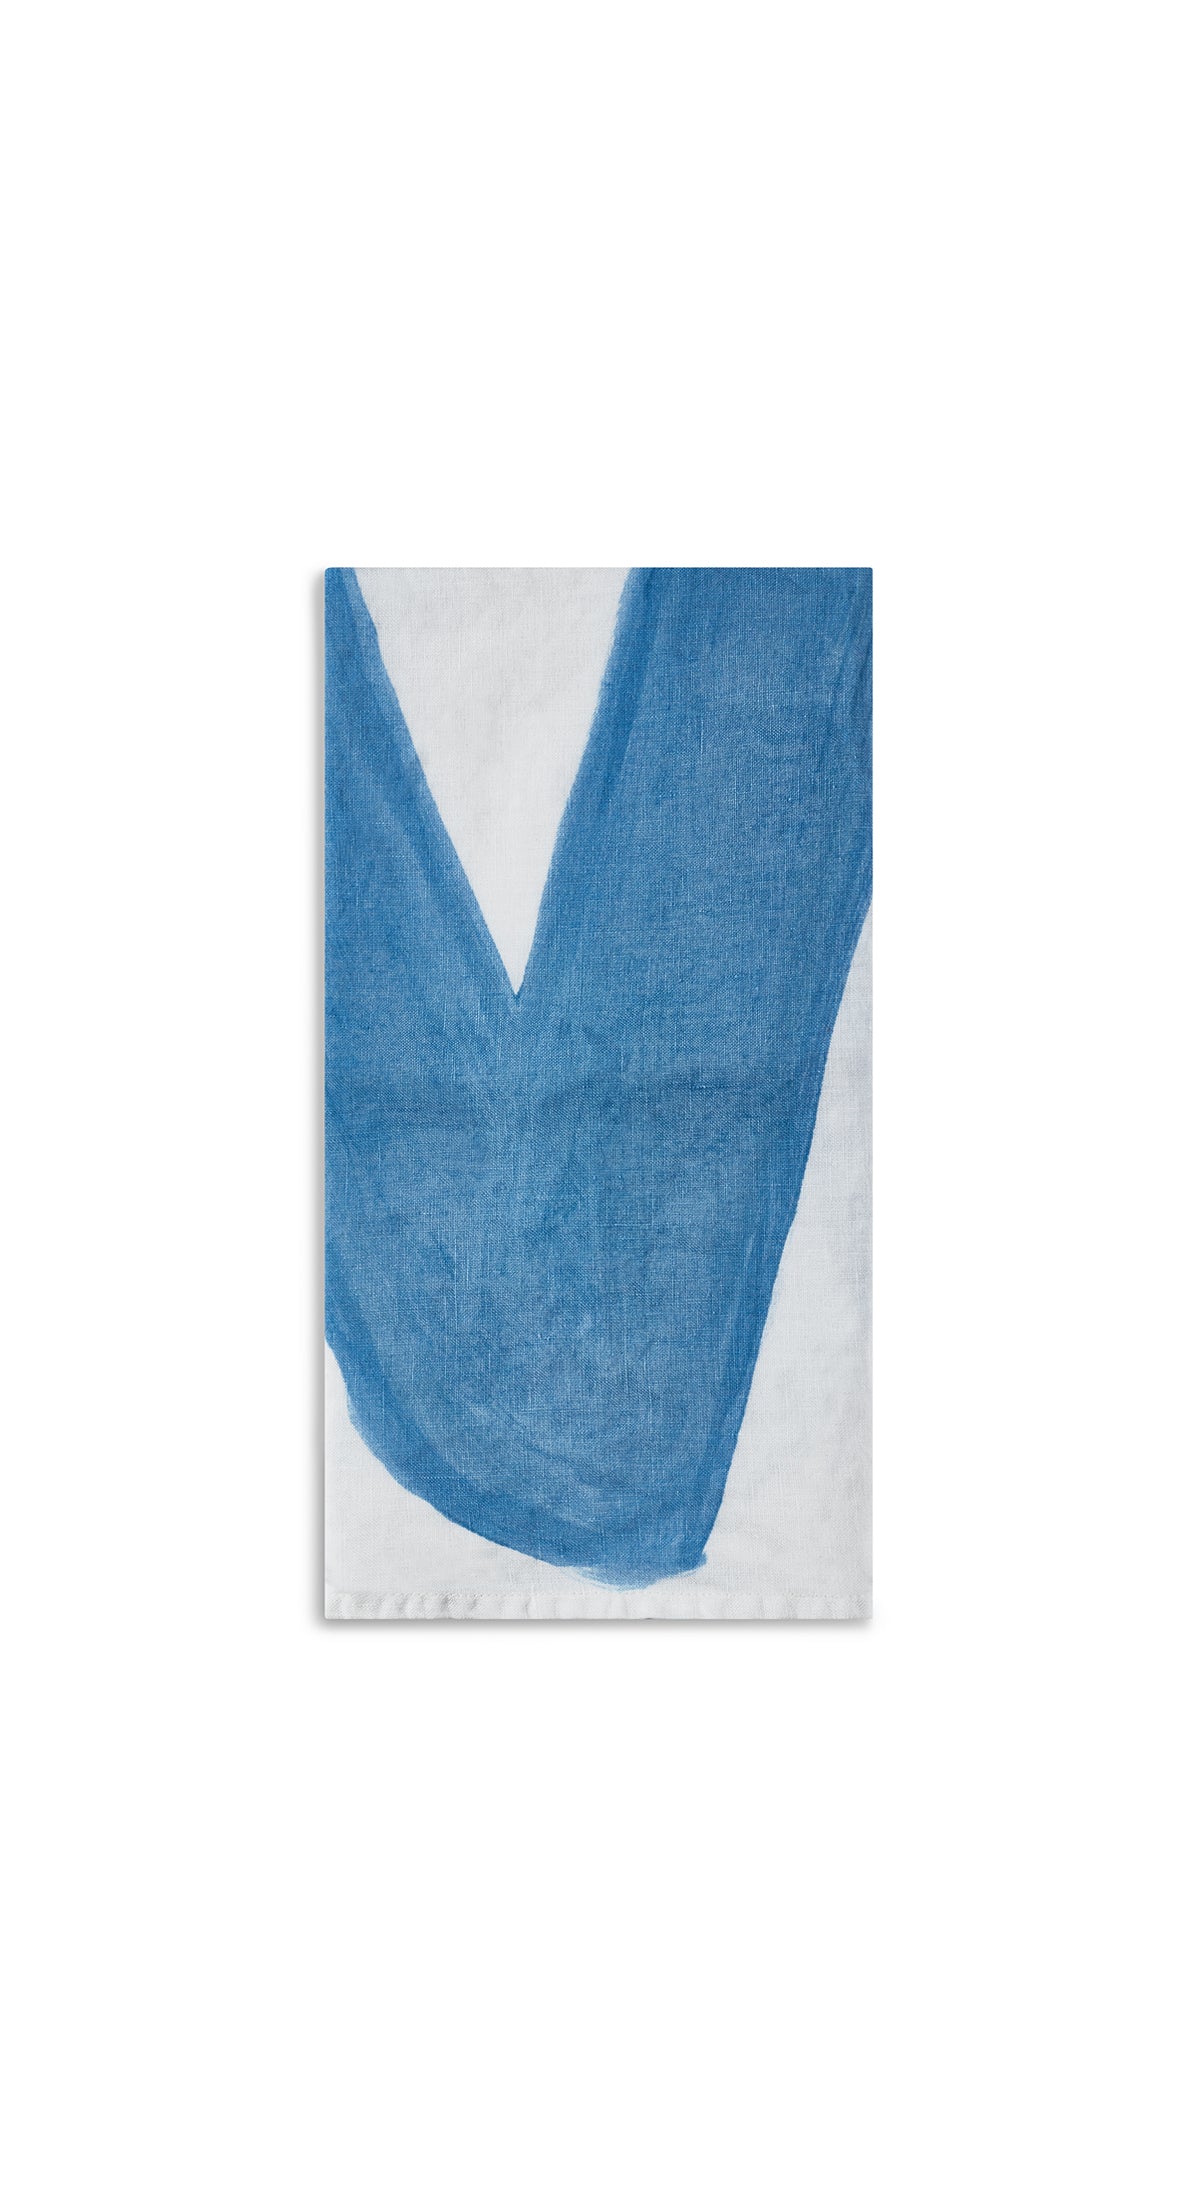 Alphabet Napkin 'N' in Sky Blue, 50x50cm